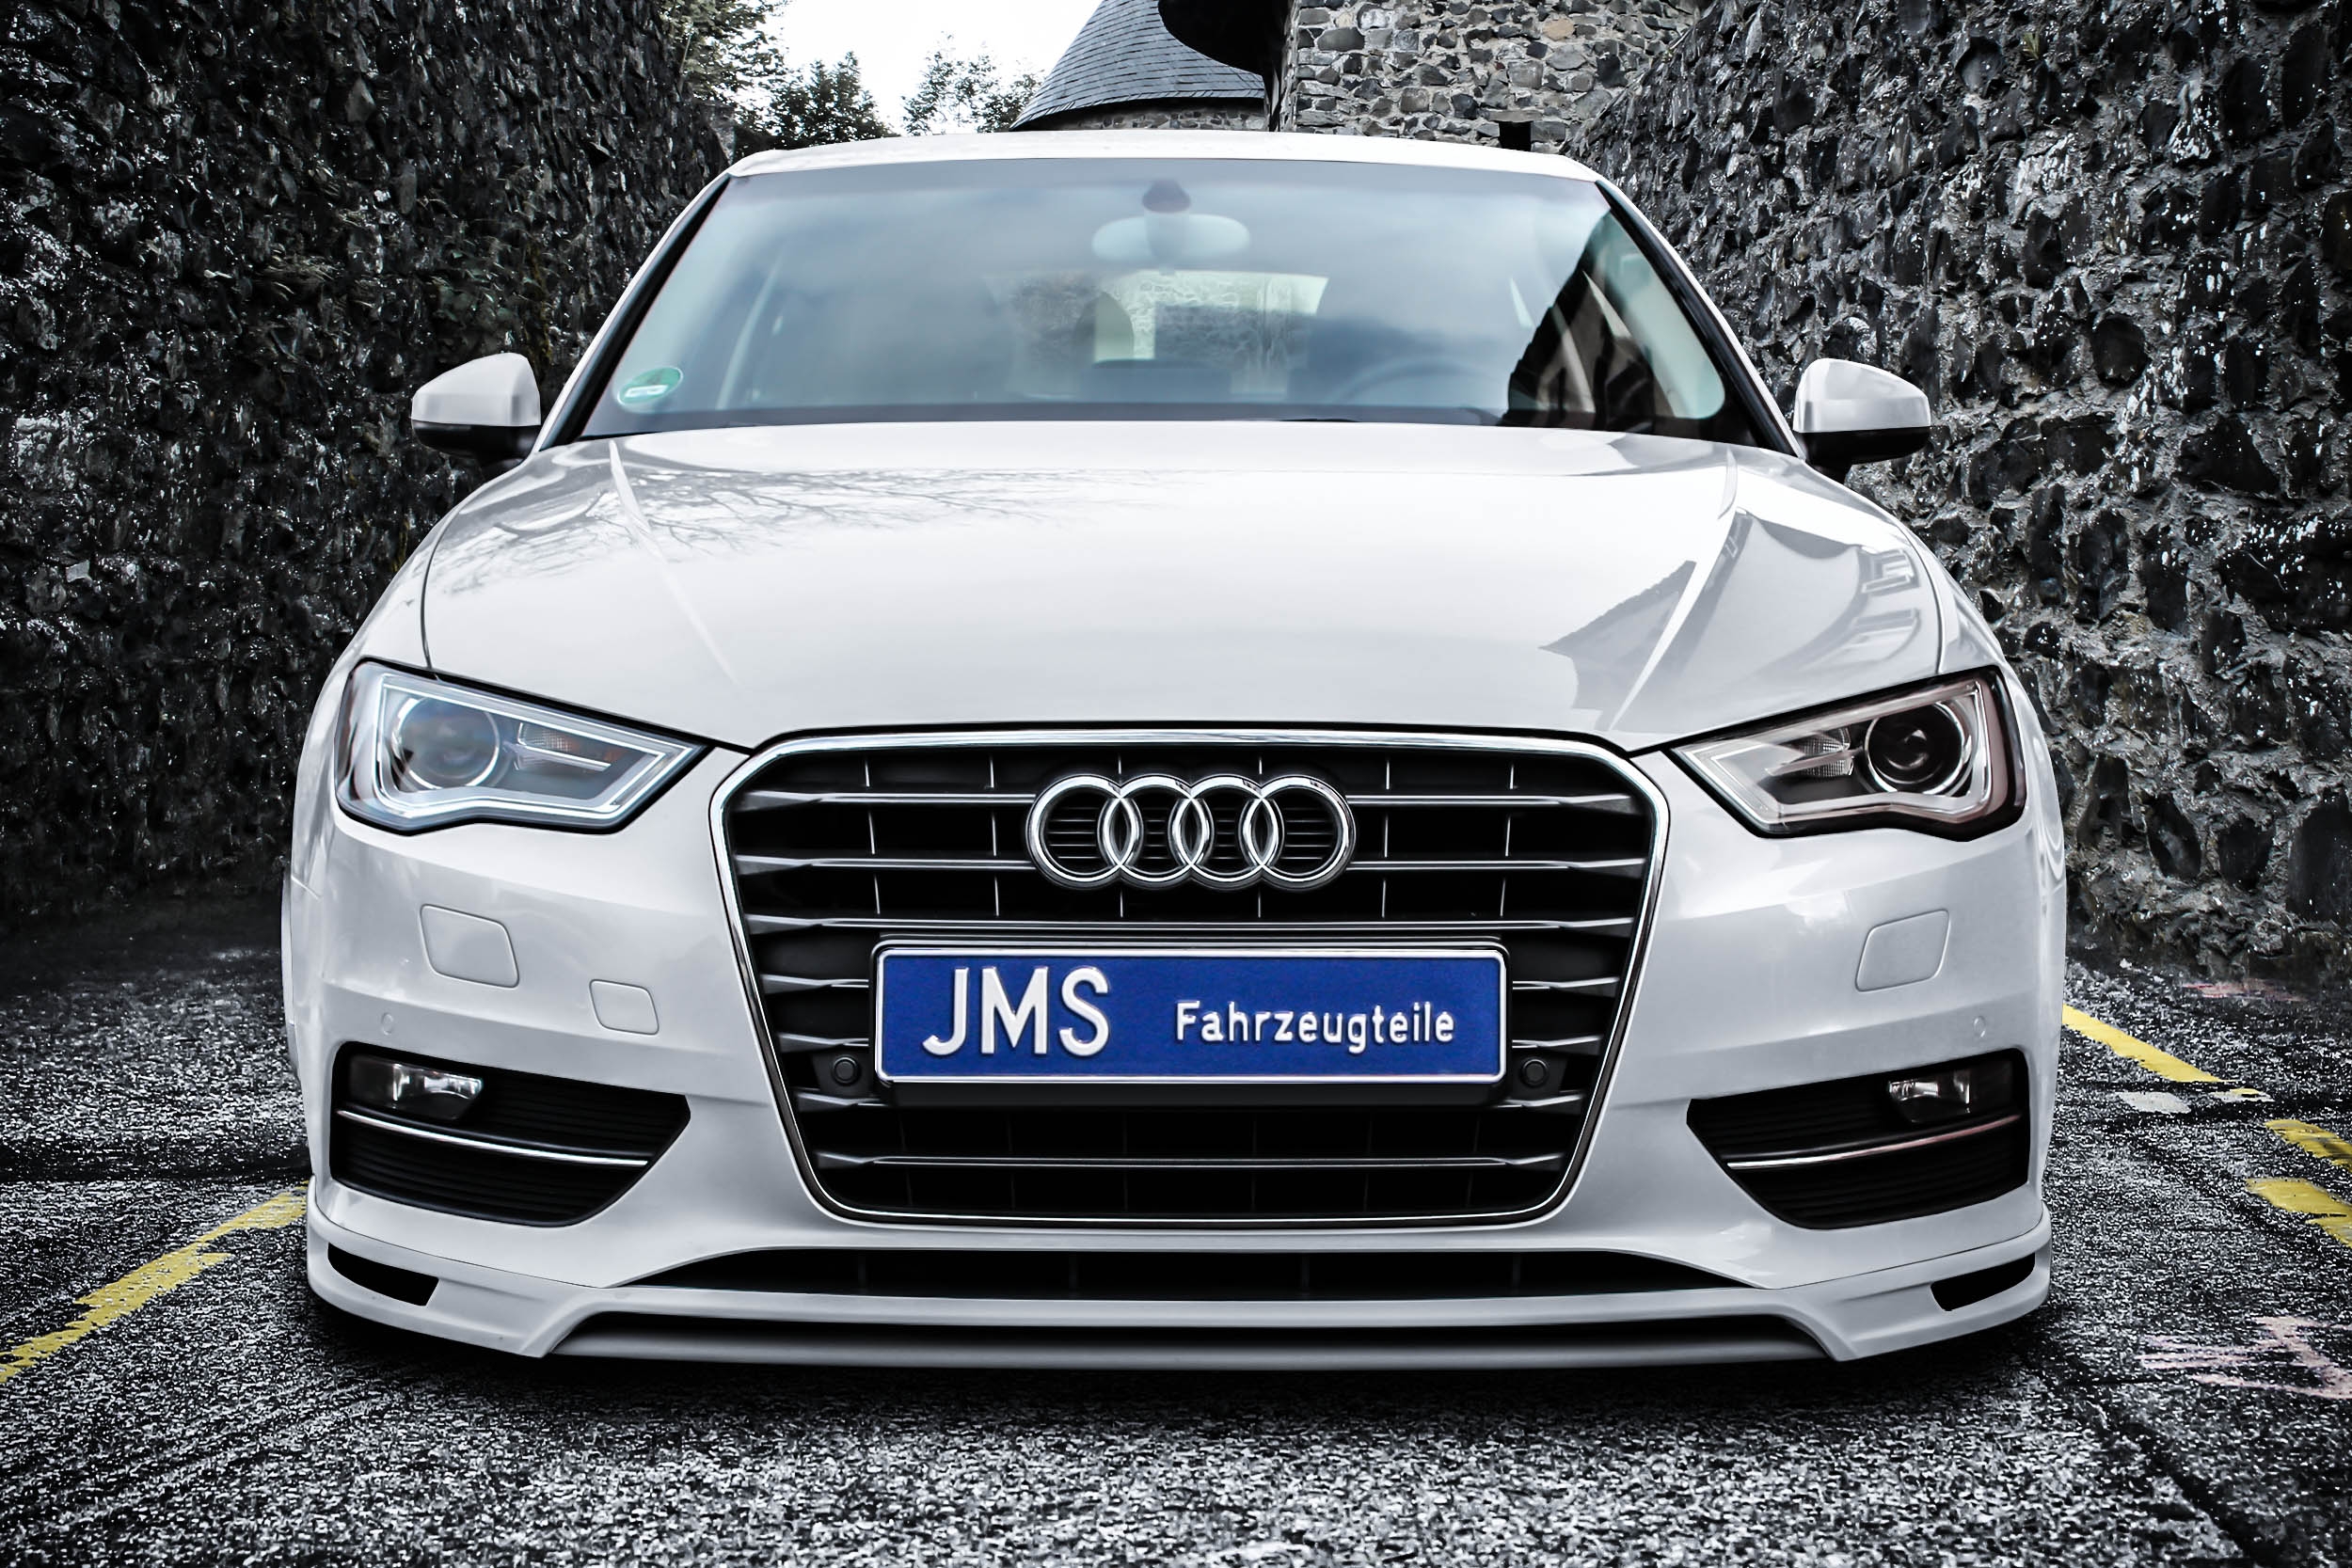 Audi A3 AV Styling from JMS, JMS - Fahrzeugteile GmbH, Story